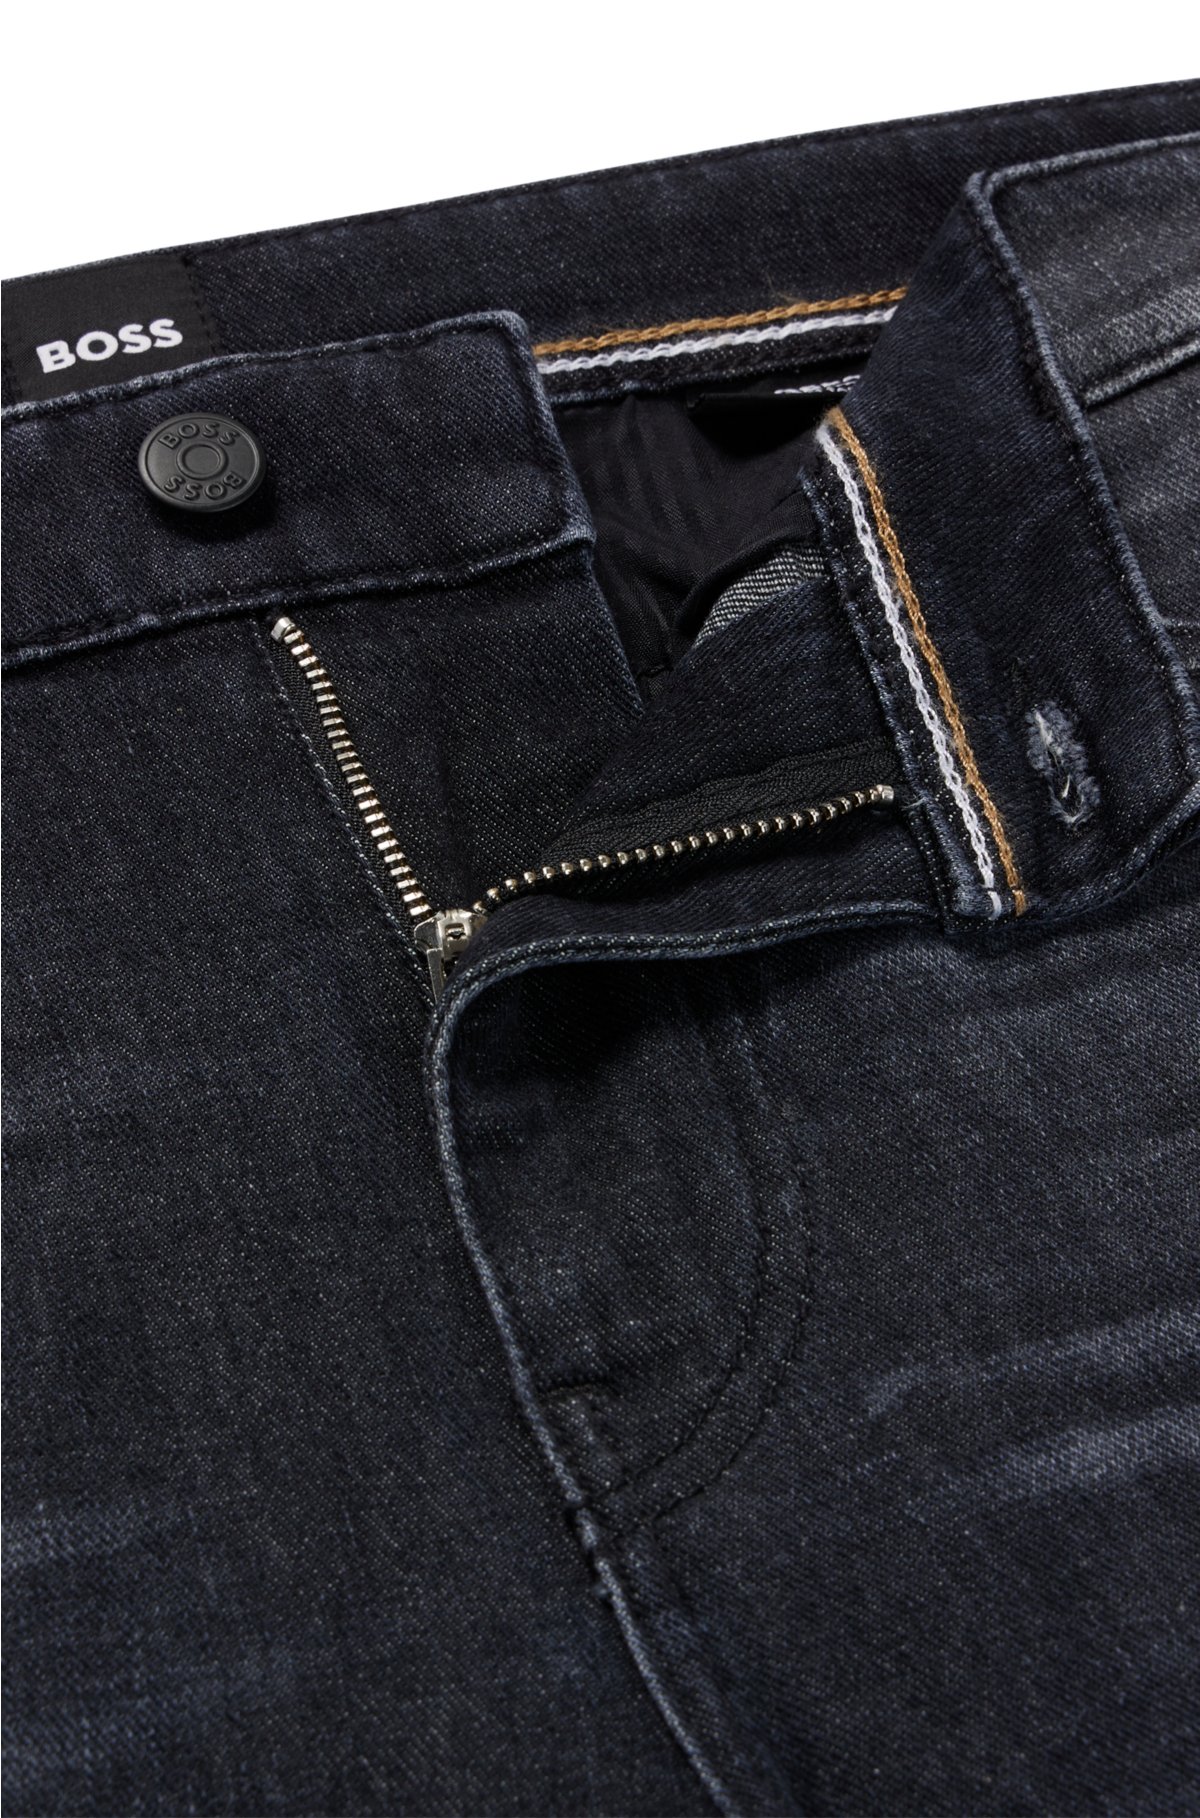 BOSS - Slim-fit jeans in super-soft gray Italian denim